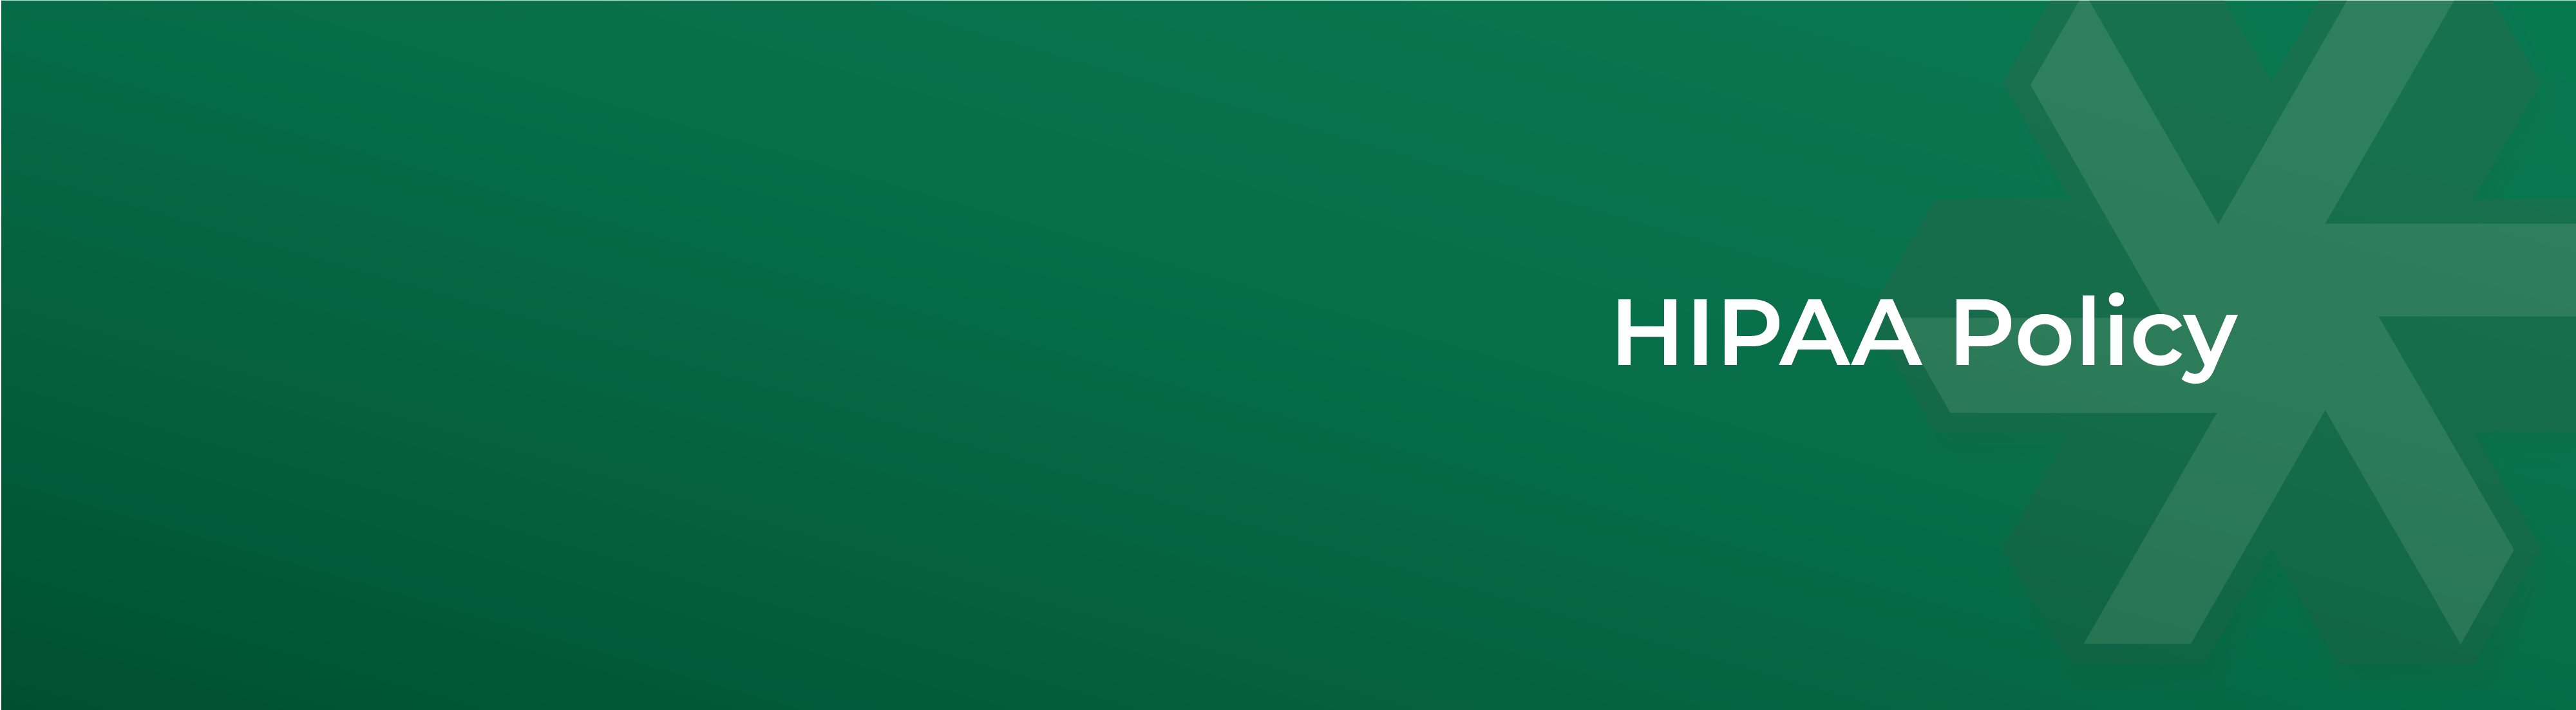 HIPAA-Header-01